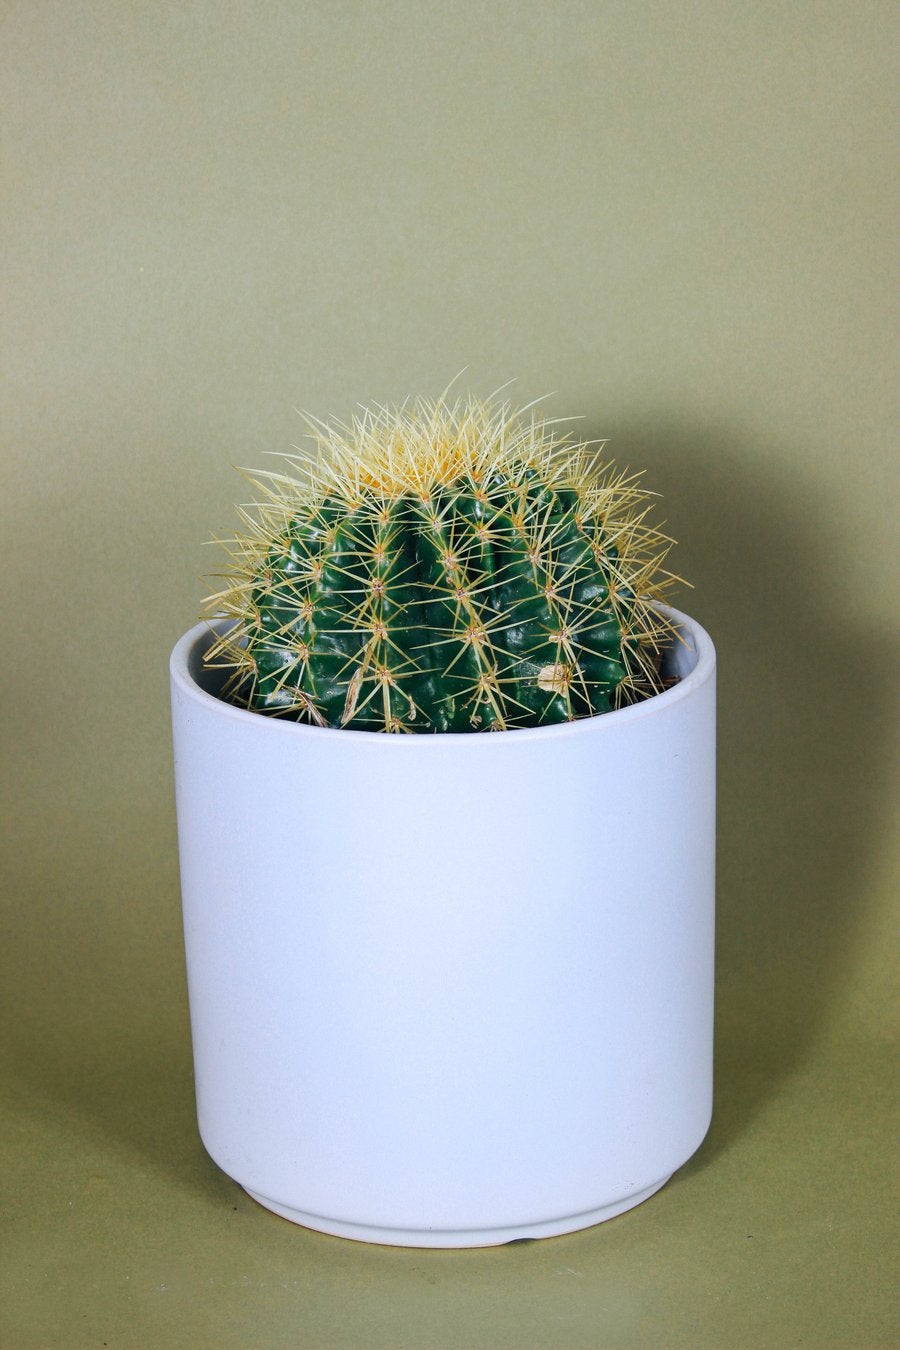 Grounded Plants Golden Barrel Cactus